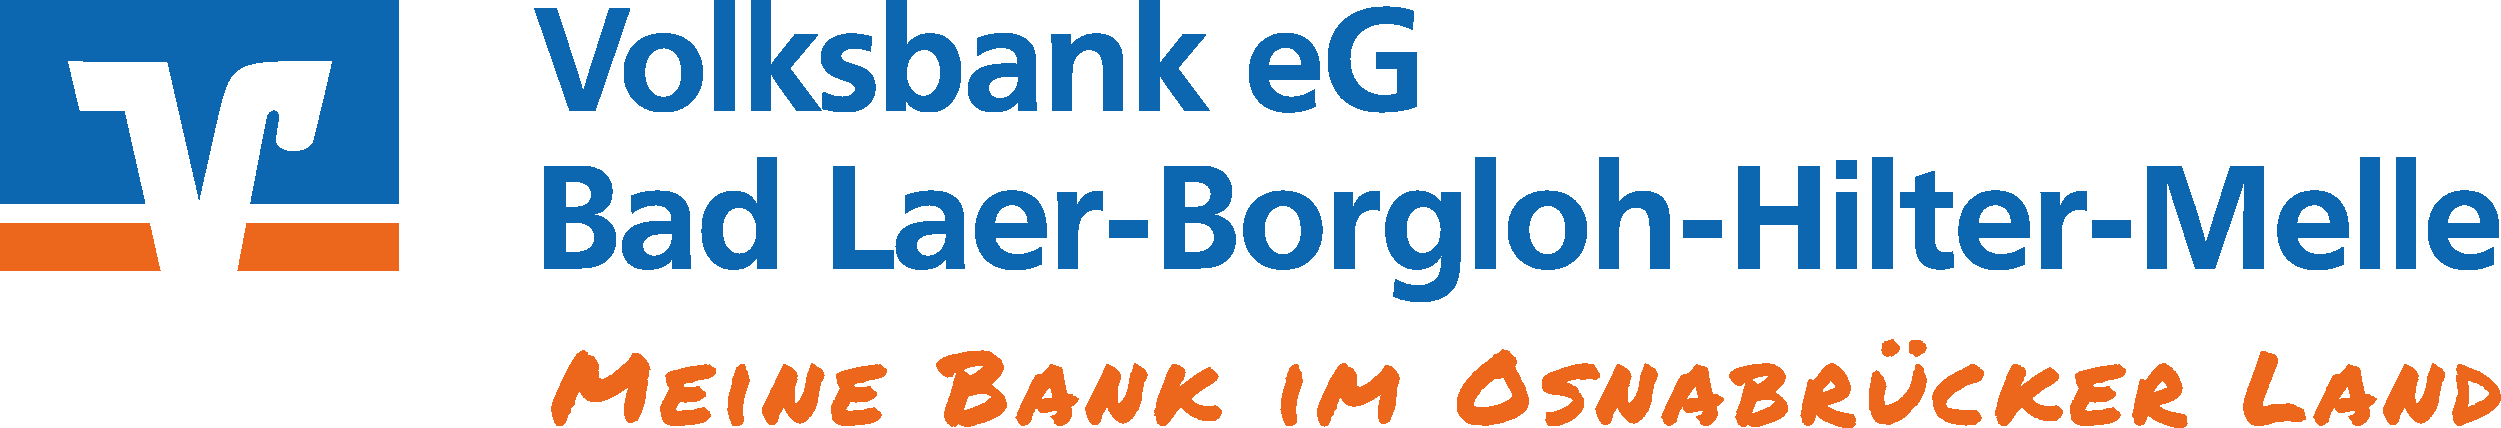 Volksbank eG Bad Laer-Borgloh-Hilter-Melle Logo